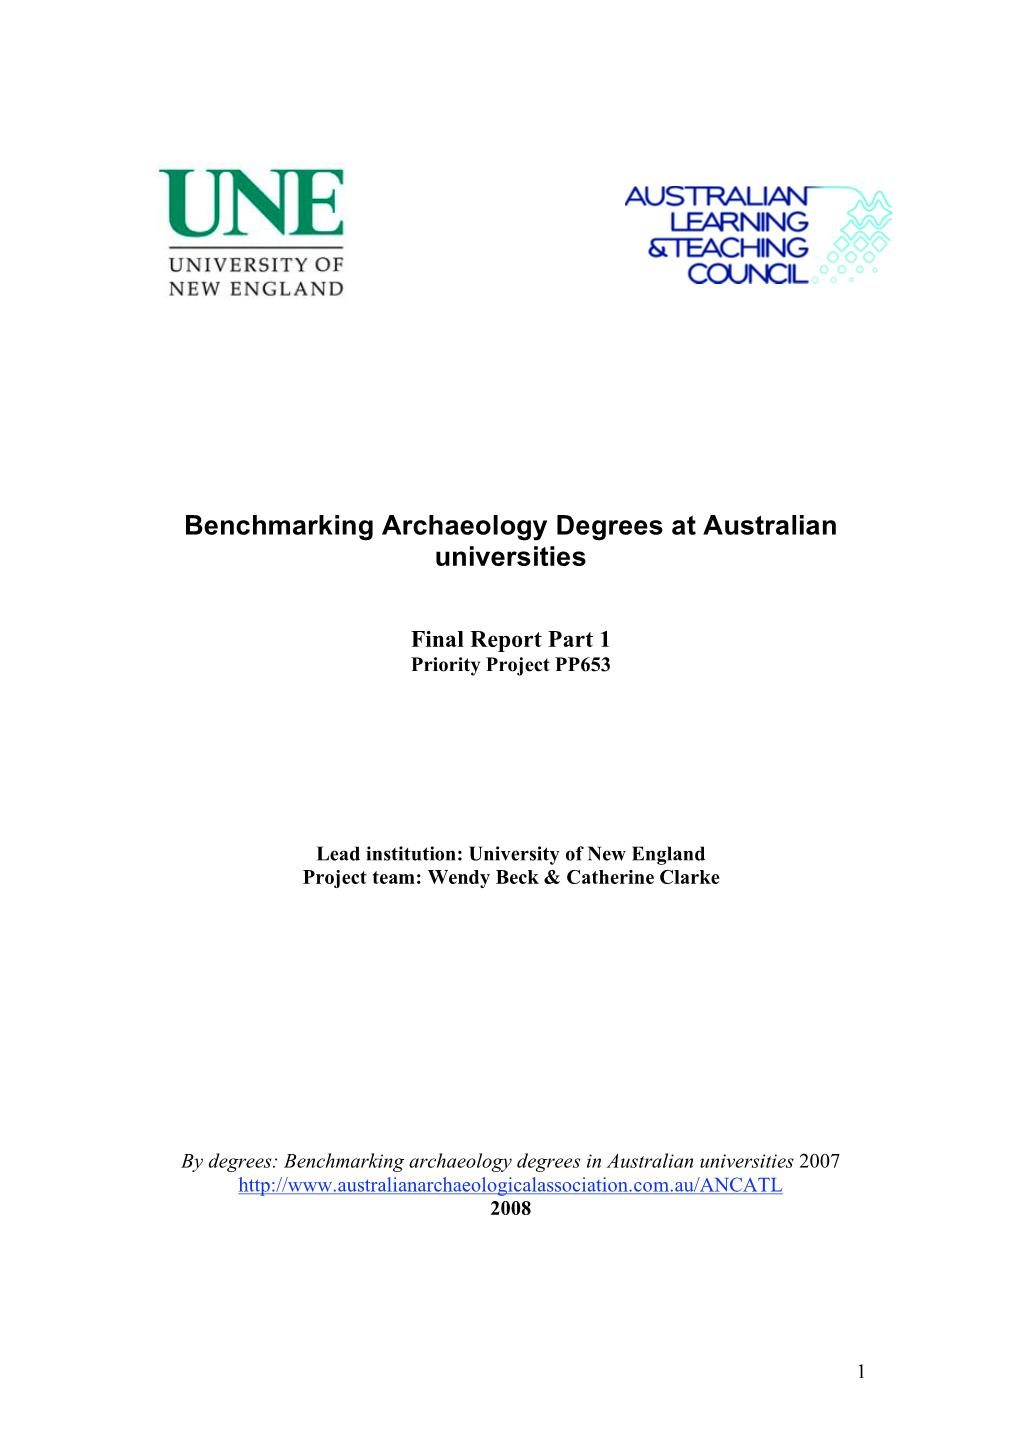 Benchmarking Archaeology Degrees at Australian Universities